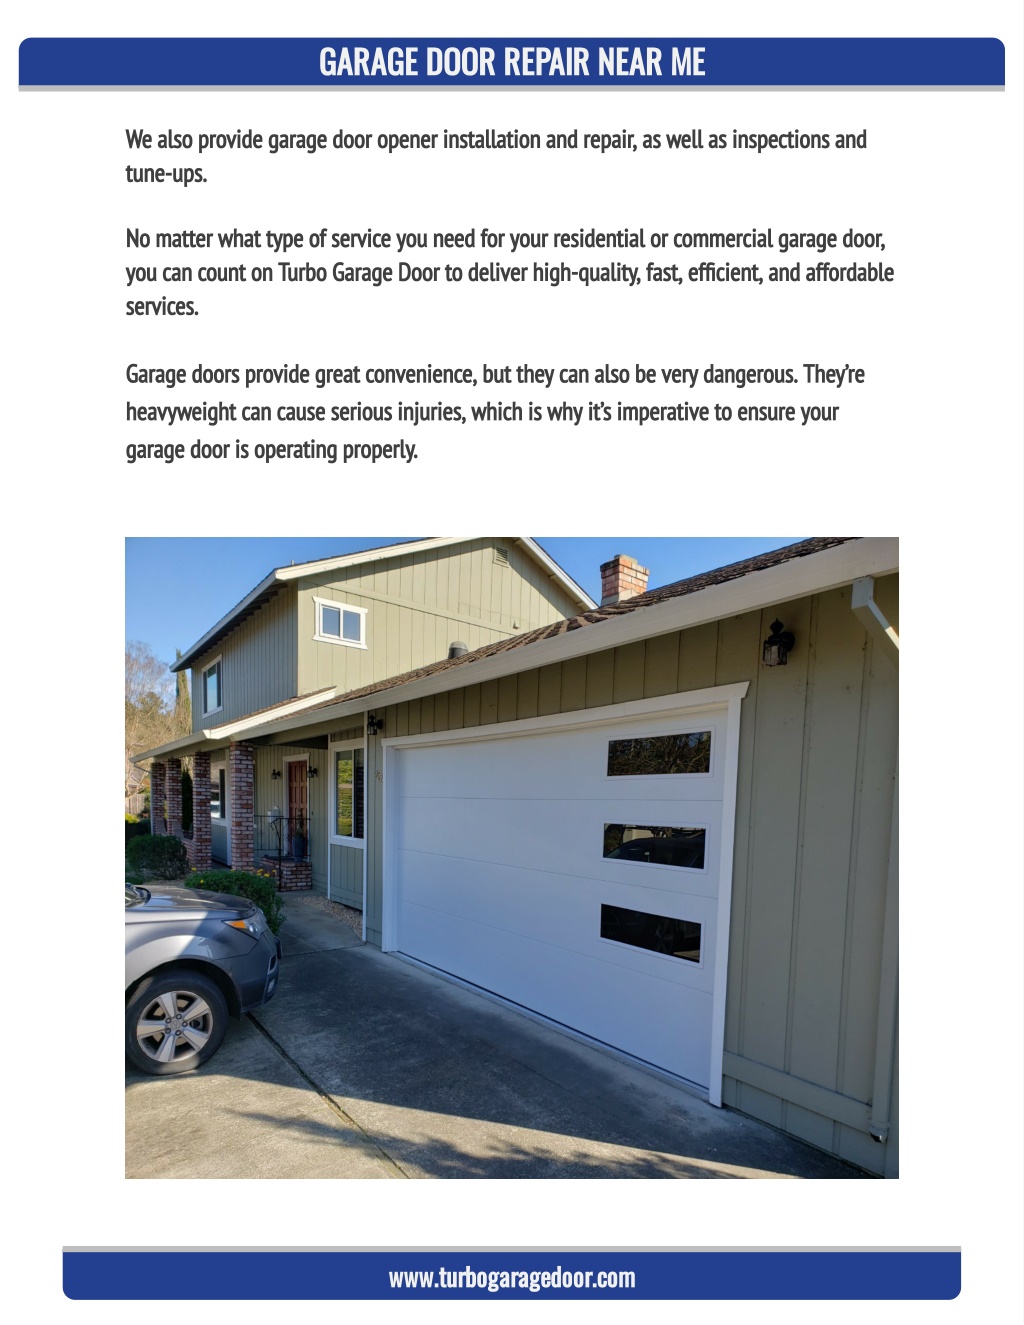 PPT - Garage Door Repair Near Me PowerPoint Presentation ...